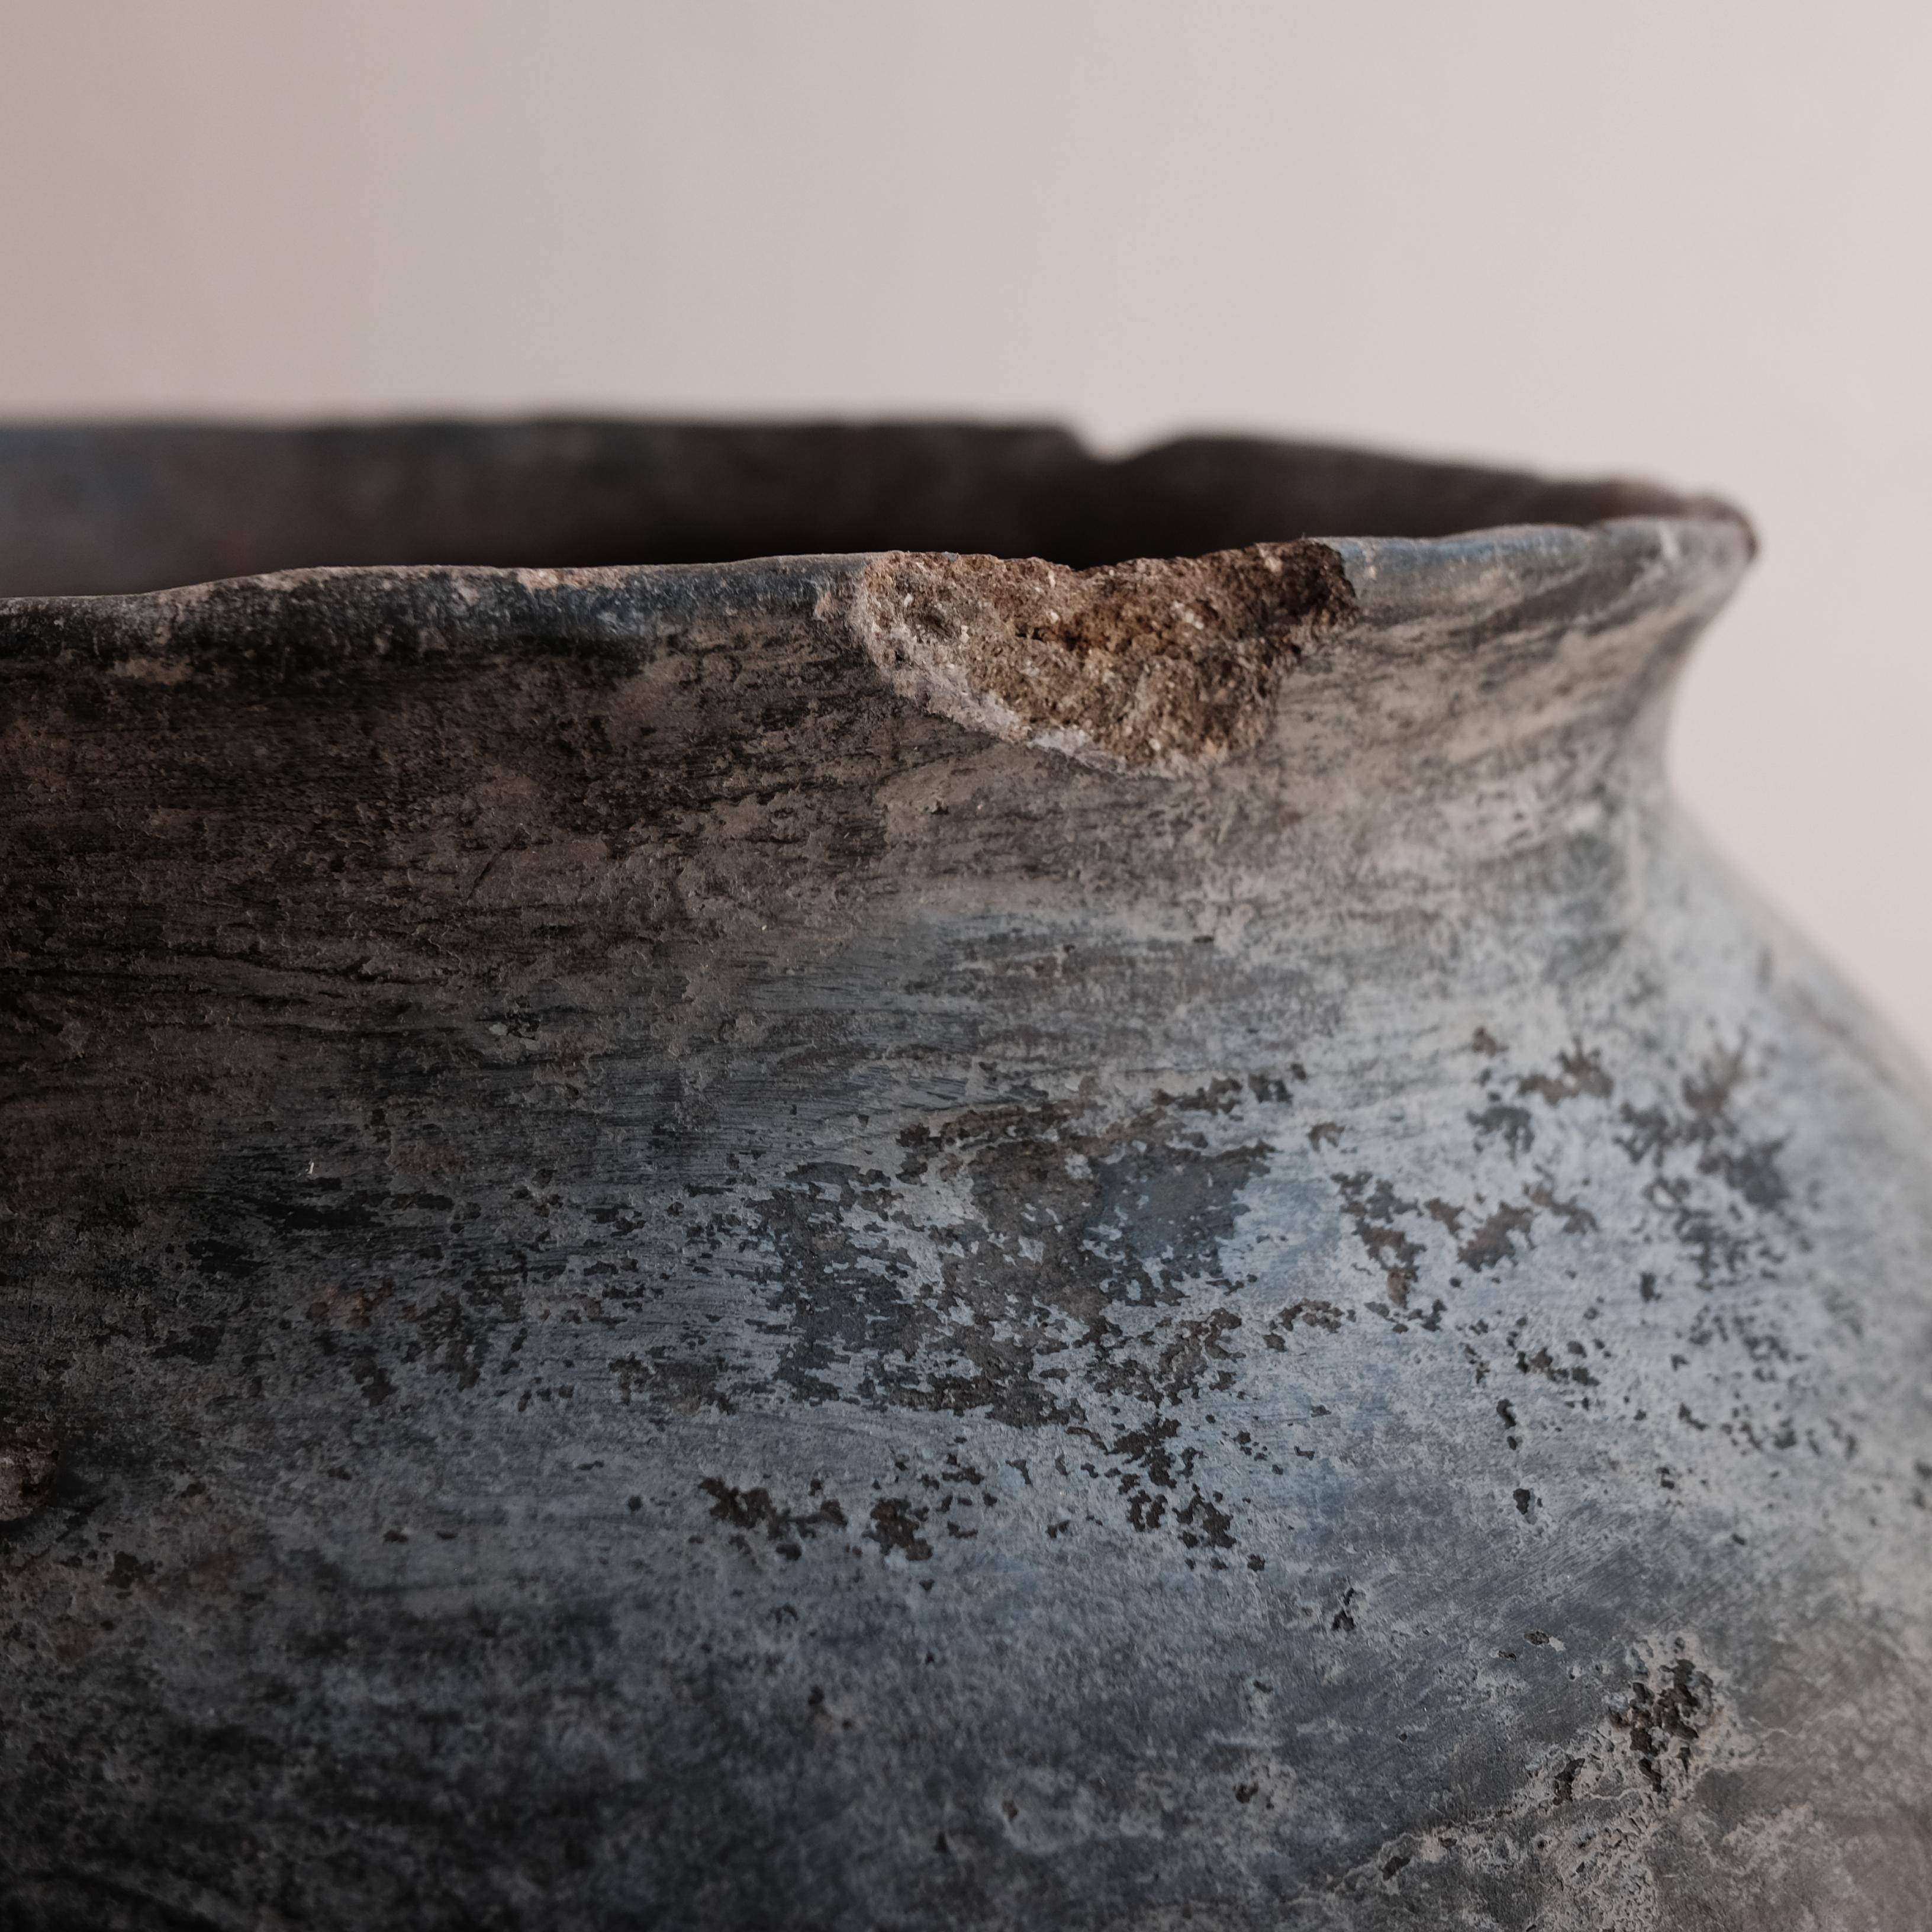 Primitive Styled Pot from Oaxaca 2